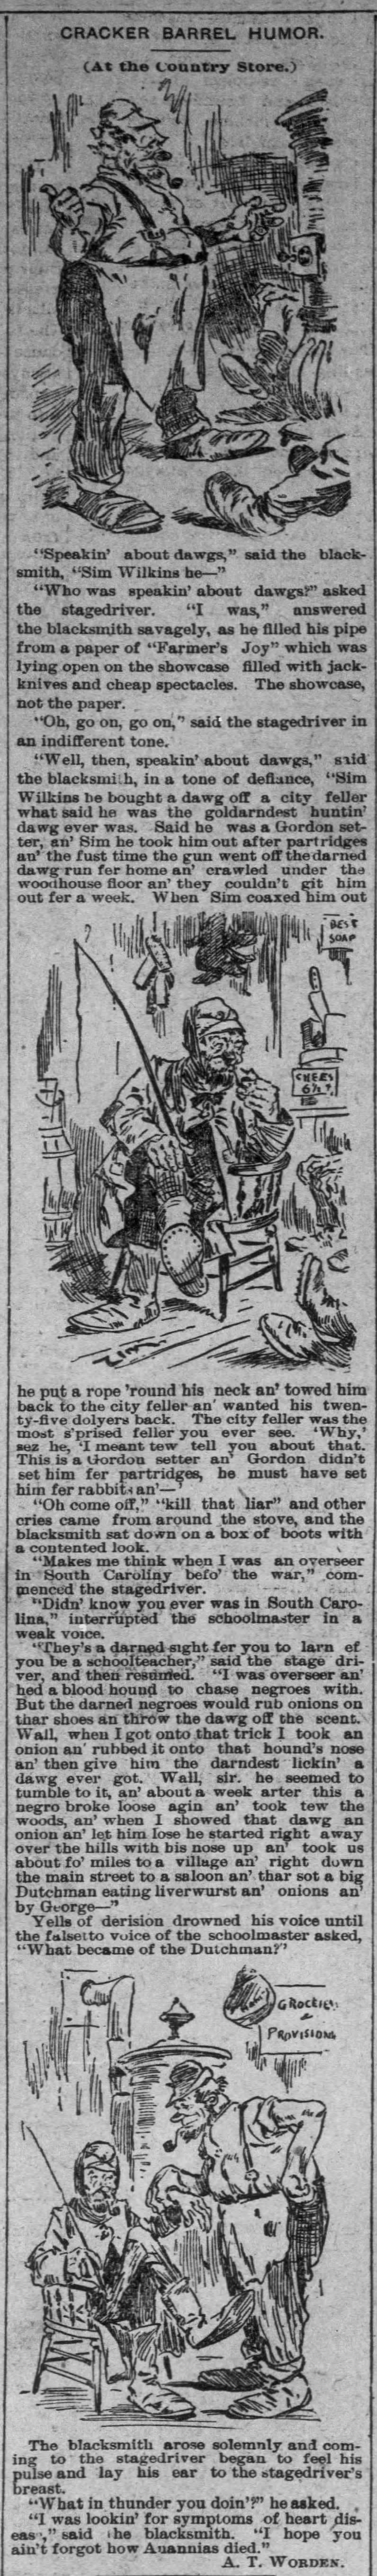 Cracker Barrel Humor (1894).